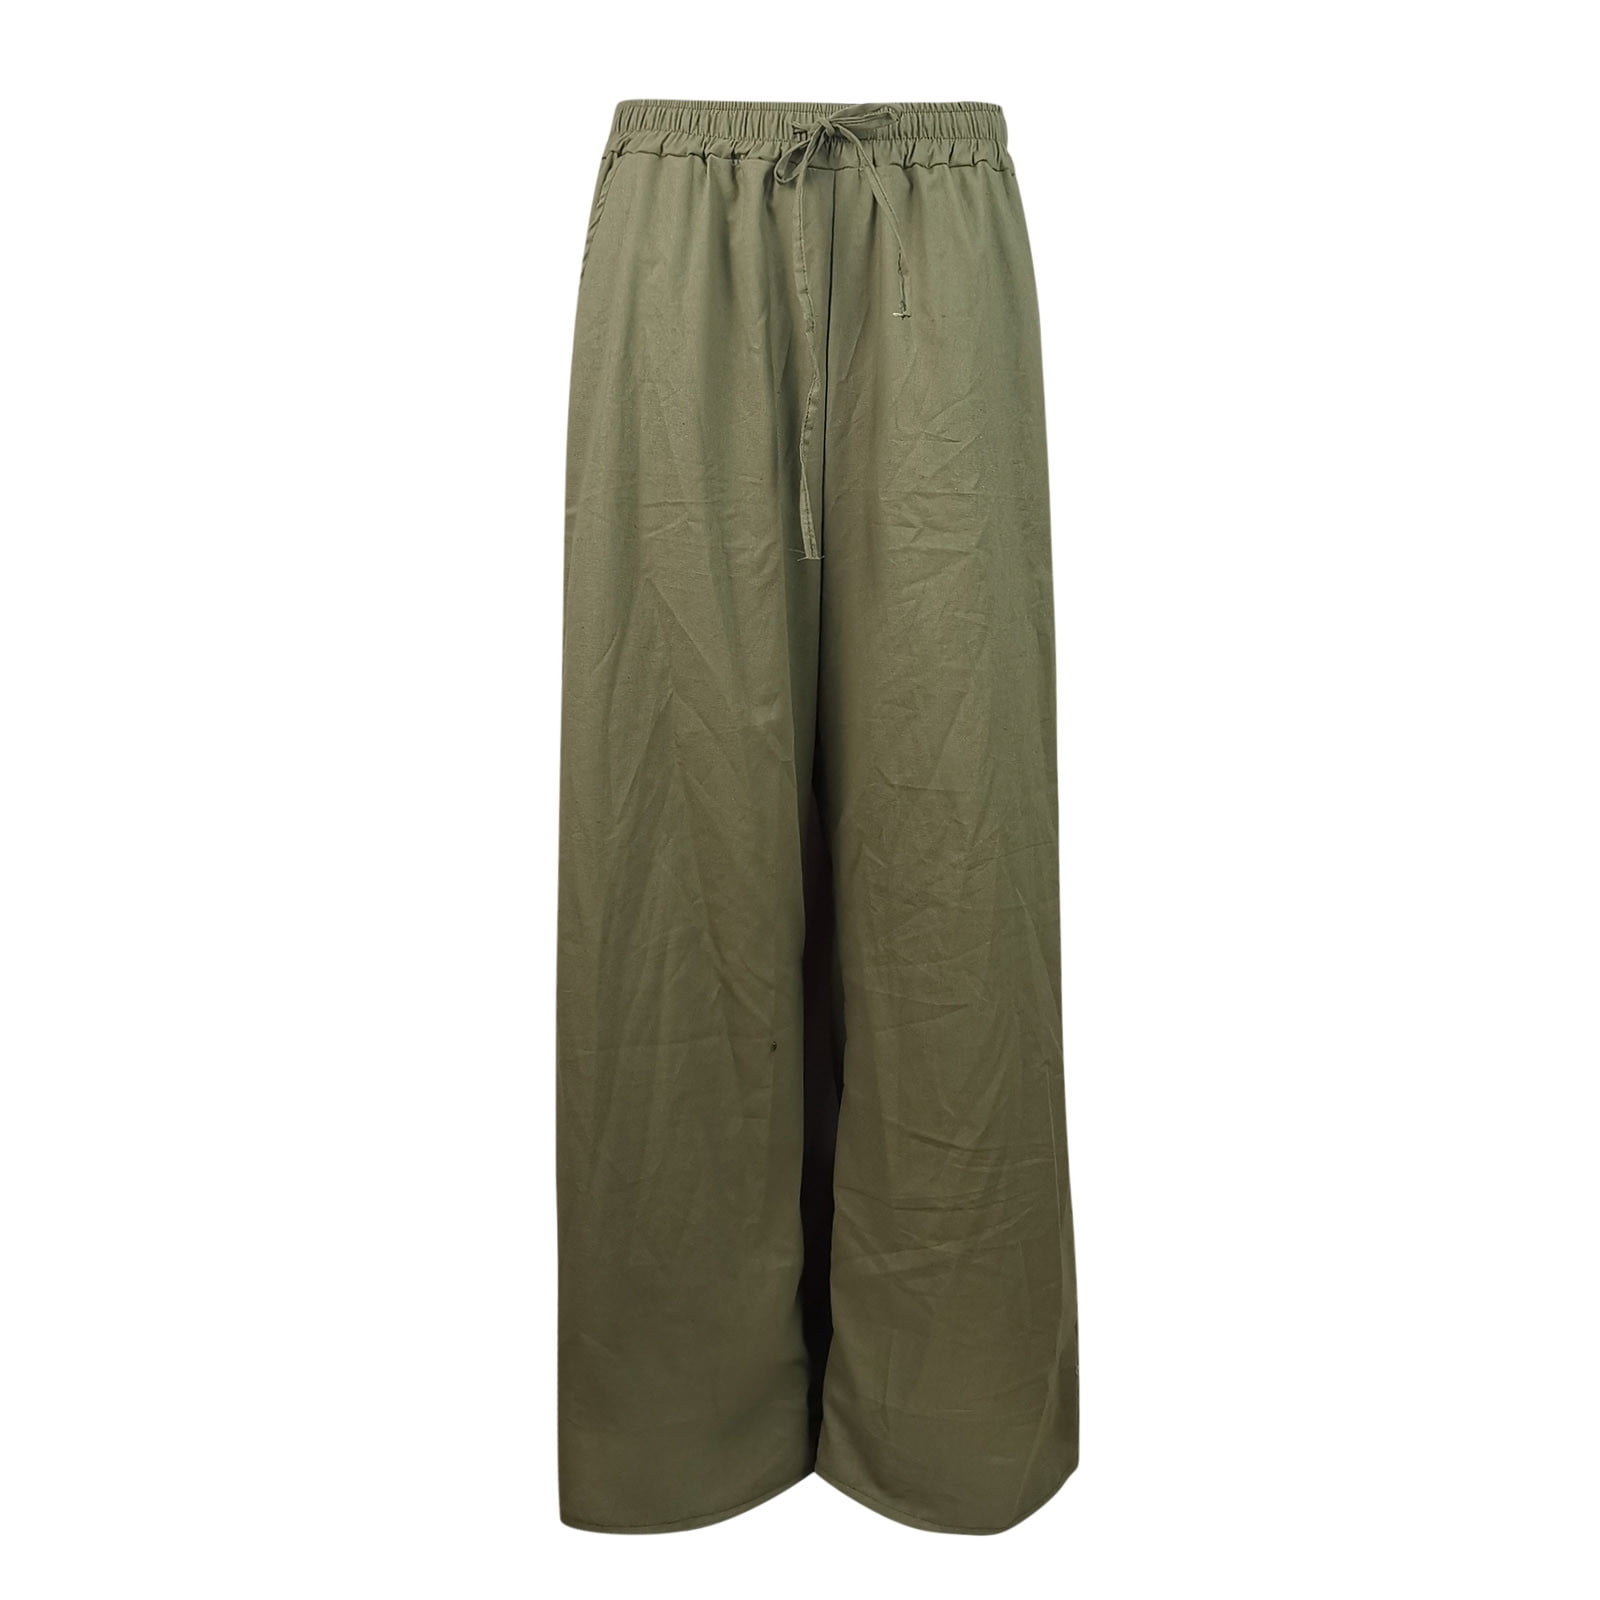 eczipvz Pants for Women Women's Casual Zipper Fly Wide Leg Loose Long Rayon  Pants Brown,M